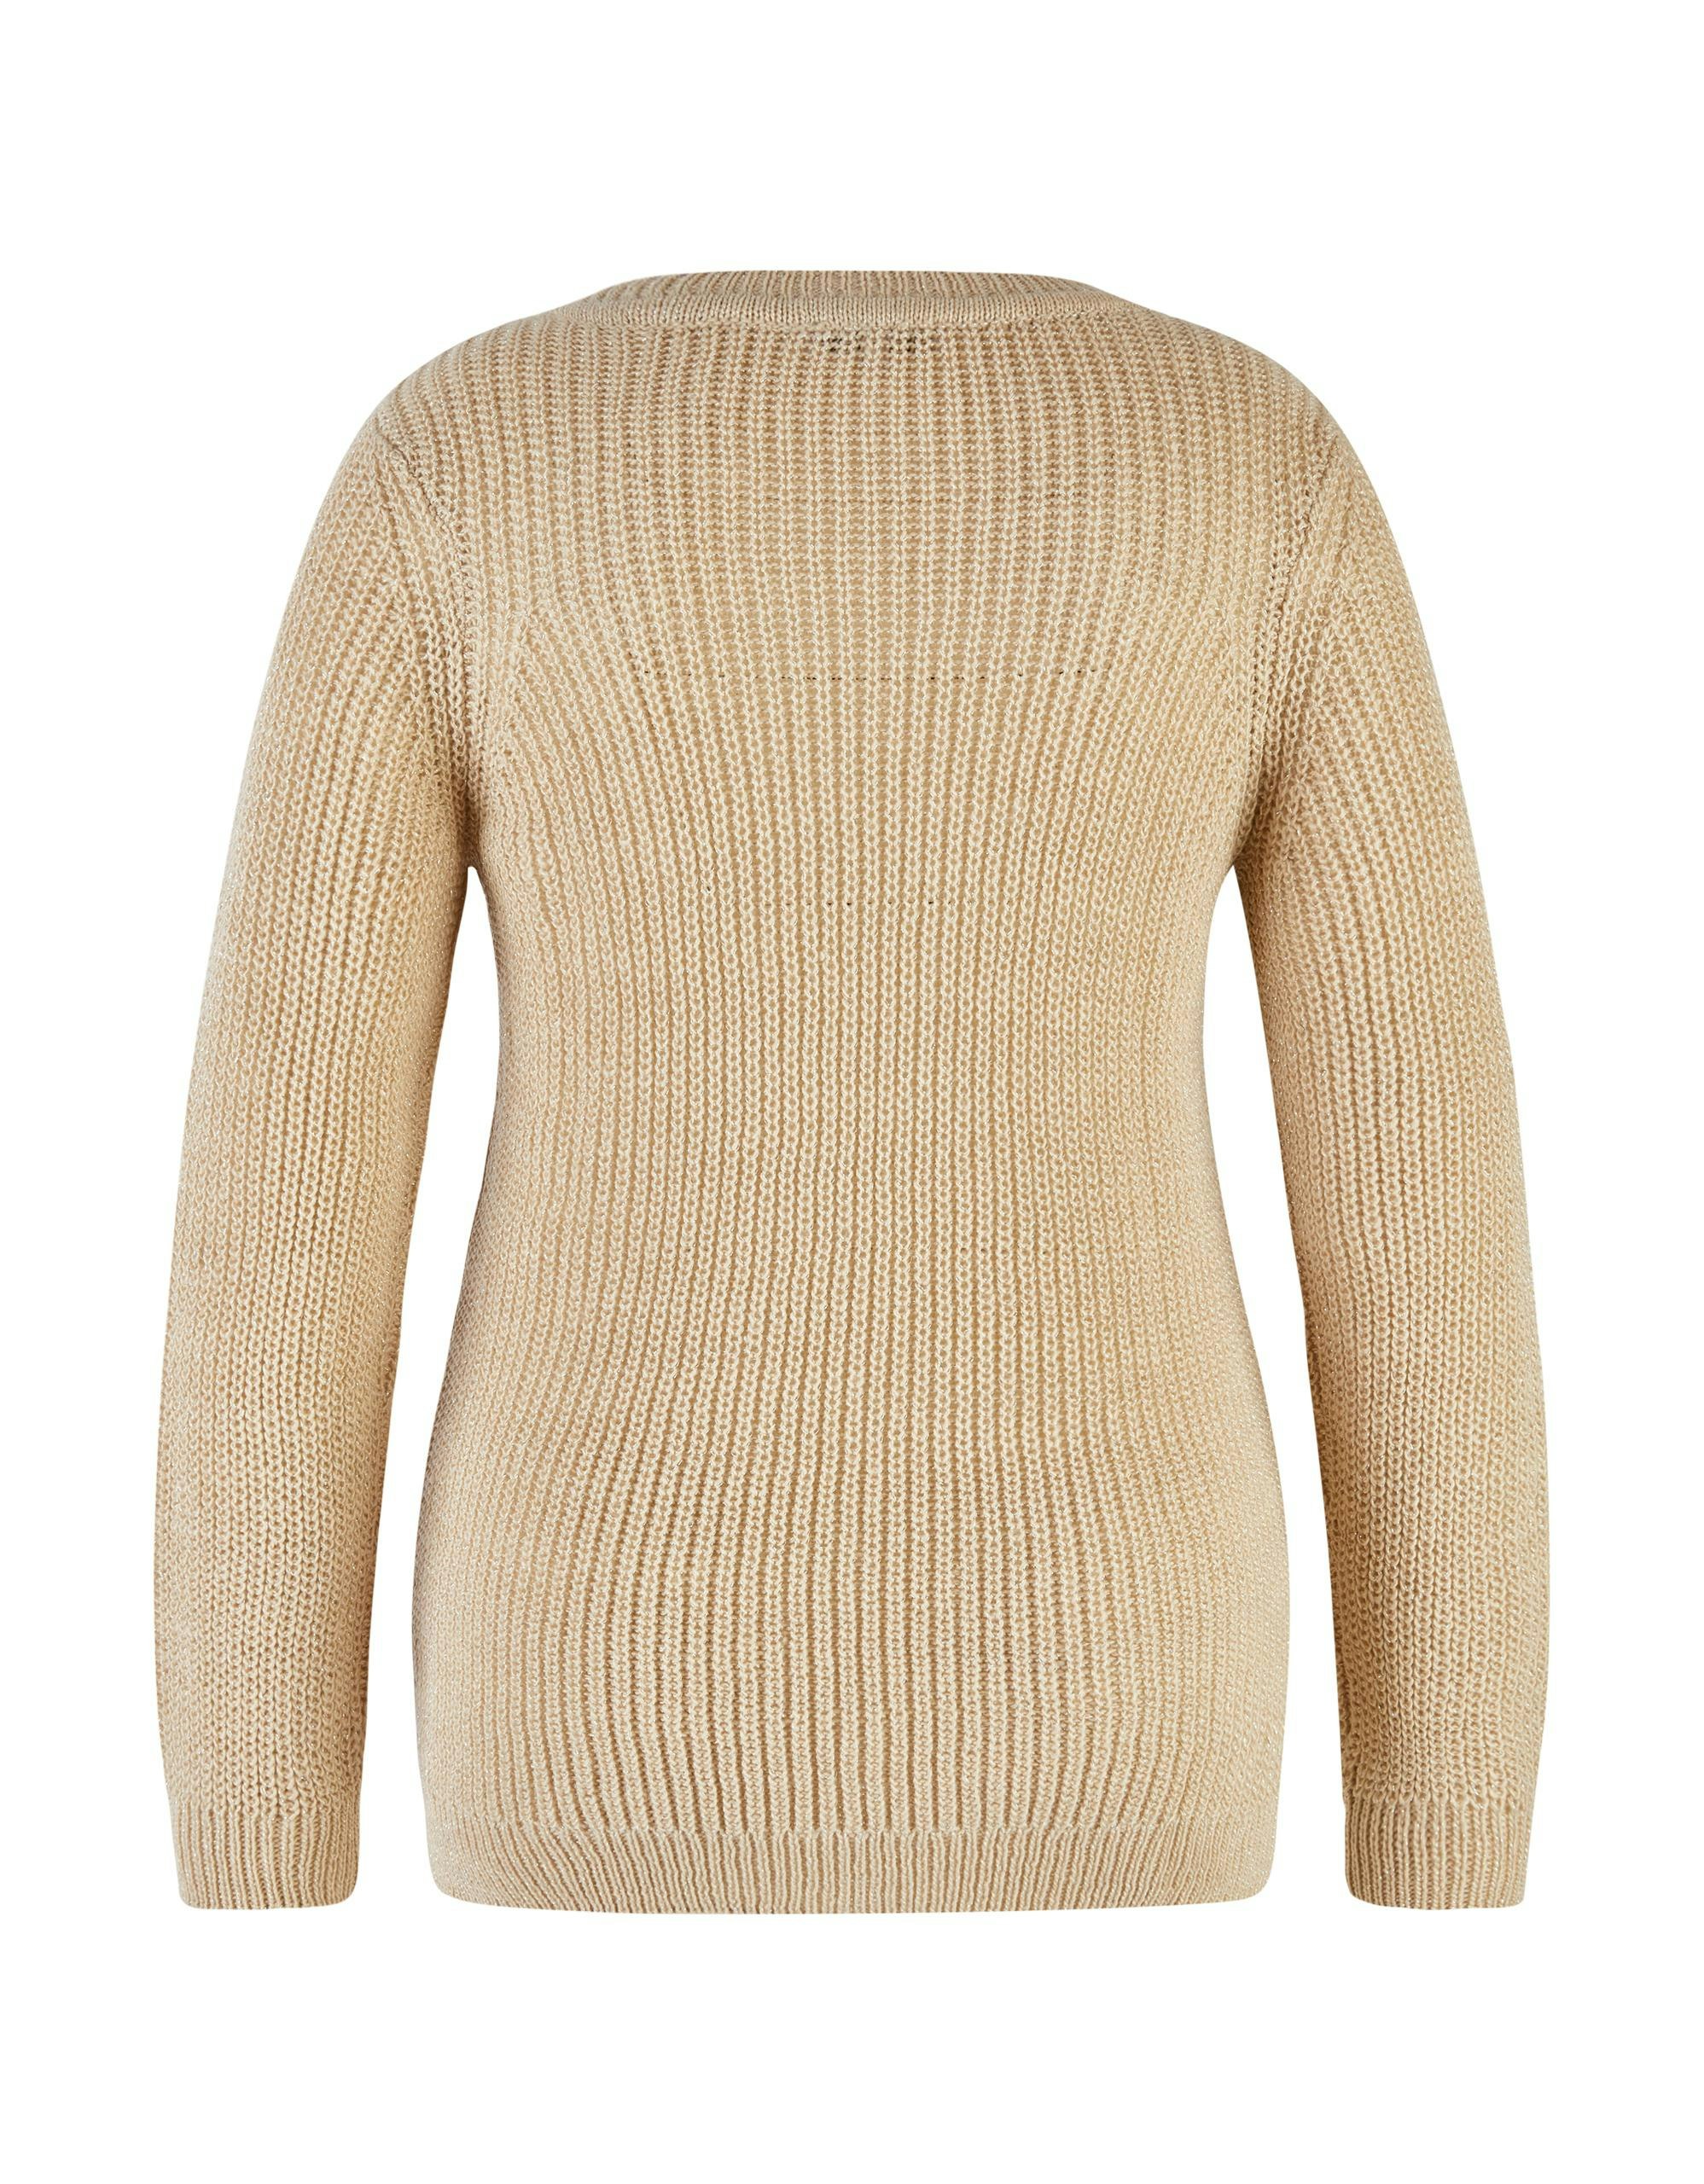 Zabaione oversized Strickpullover Weinrot meliert Mode Pullover Oversized Pullover 